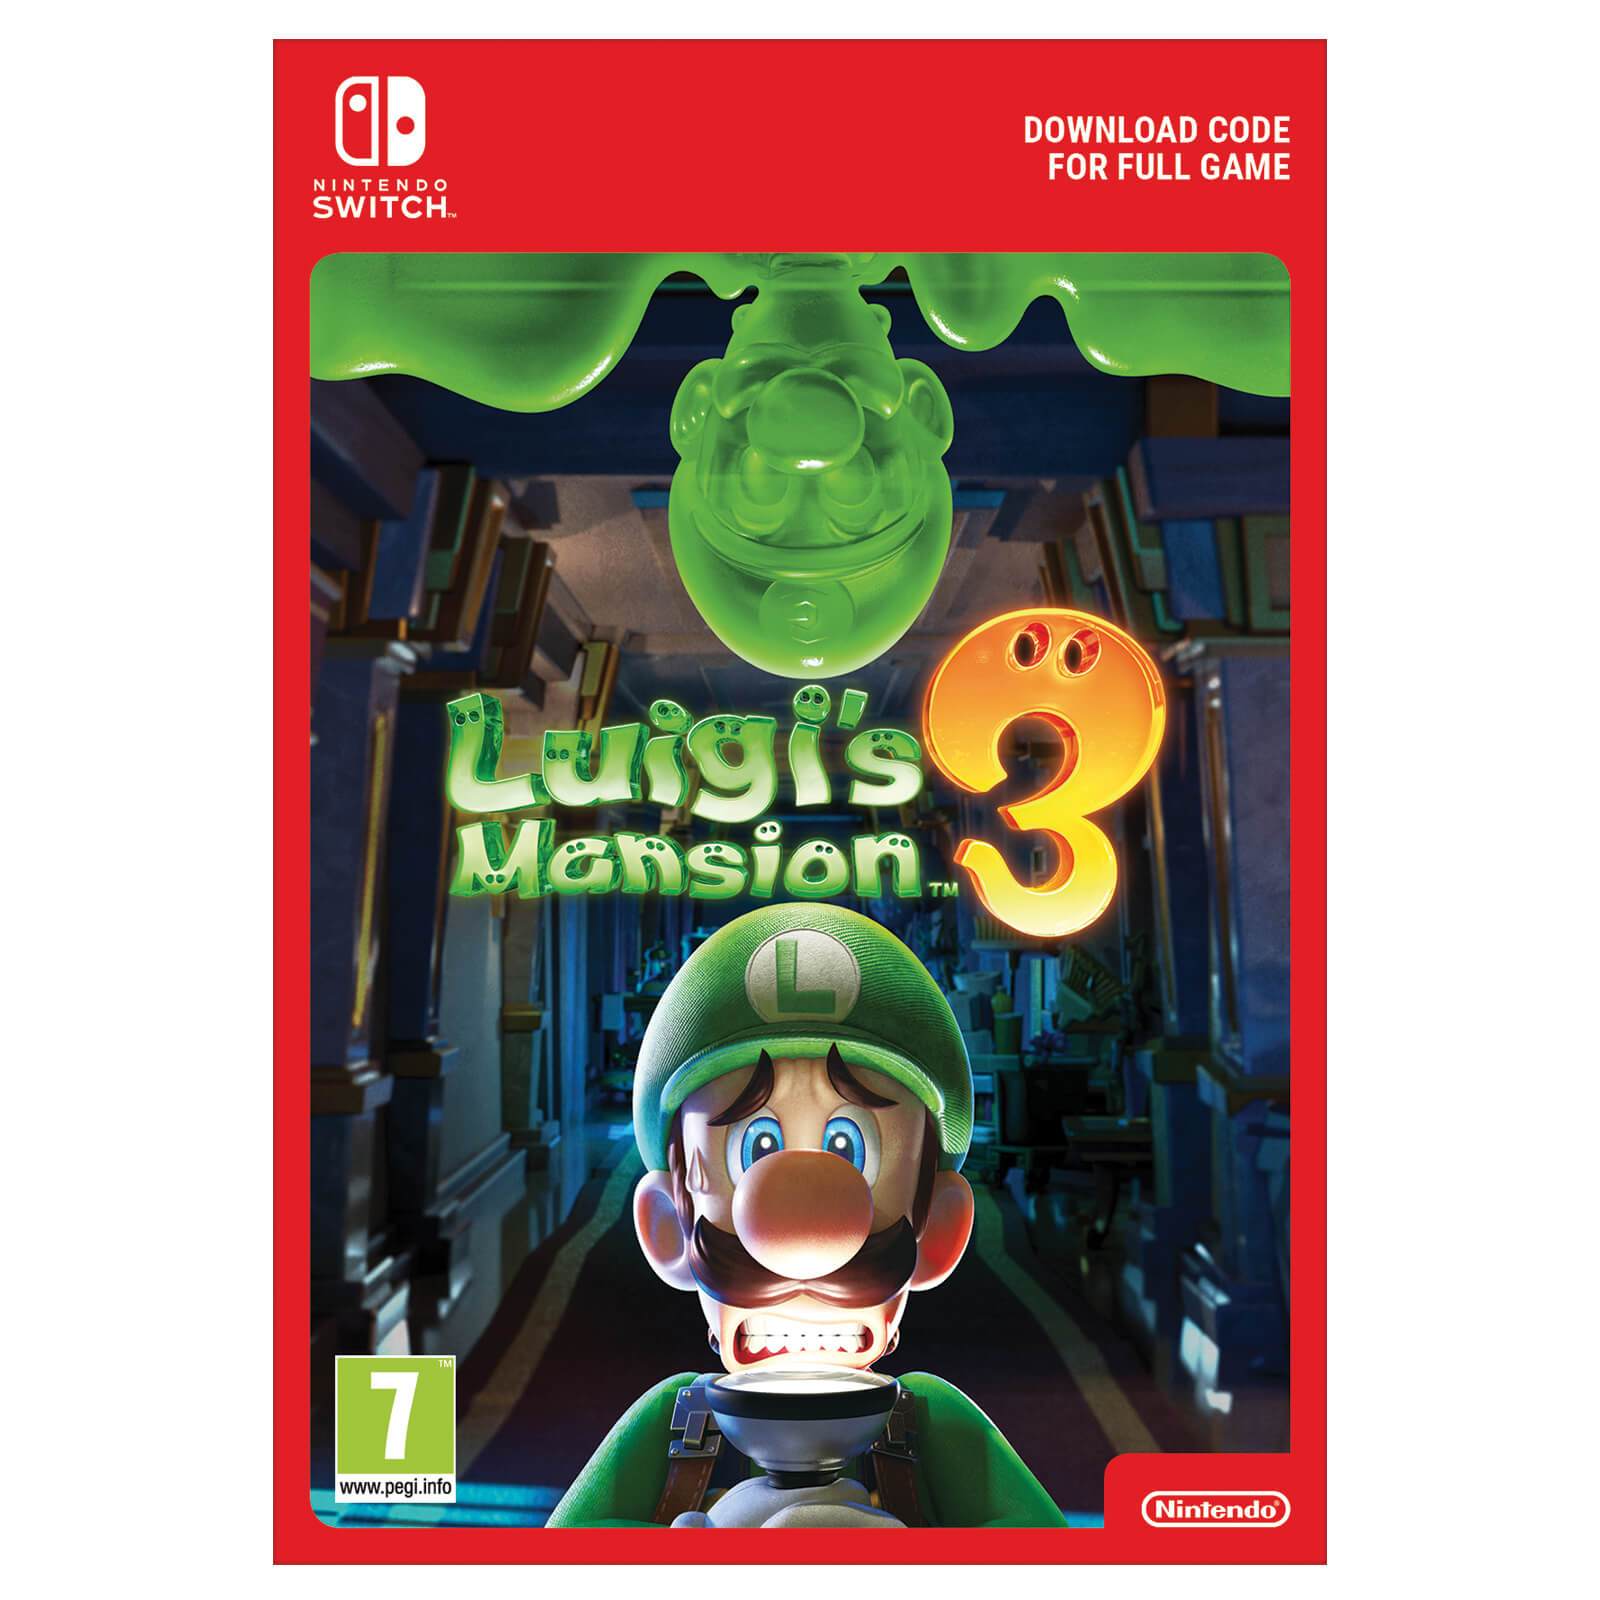 Nintendo switch luigi mansion. Игра для Nintendo Switch Nintendo Luigi's Mansion 3. Luigi's Mansion 3 [Switch]. Луиджи для свитча. Игра на Нинтендо свитч luigismonsion.